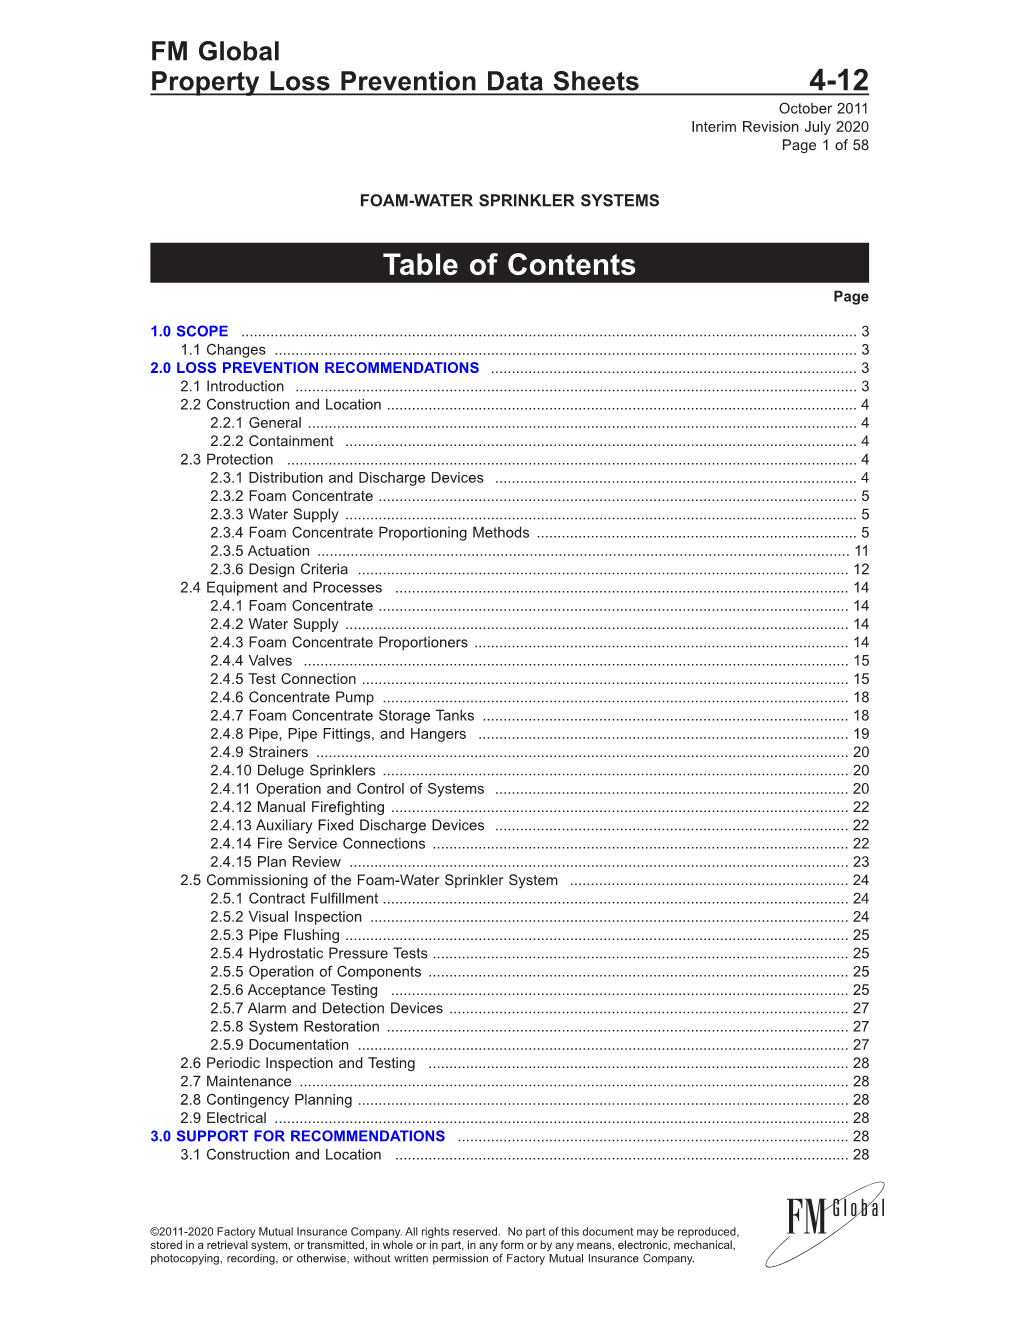 DS 4-12 Foam-Water Sprinkler Systems (Data Sheet)